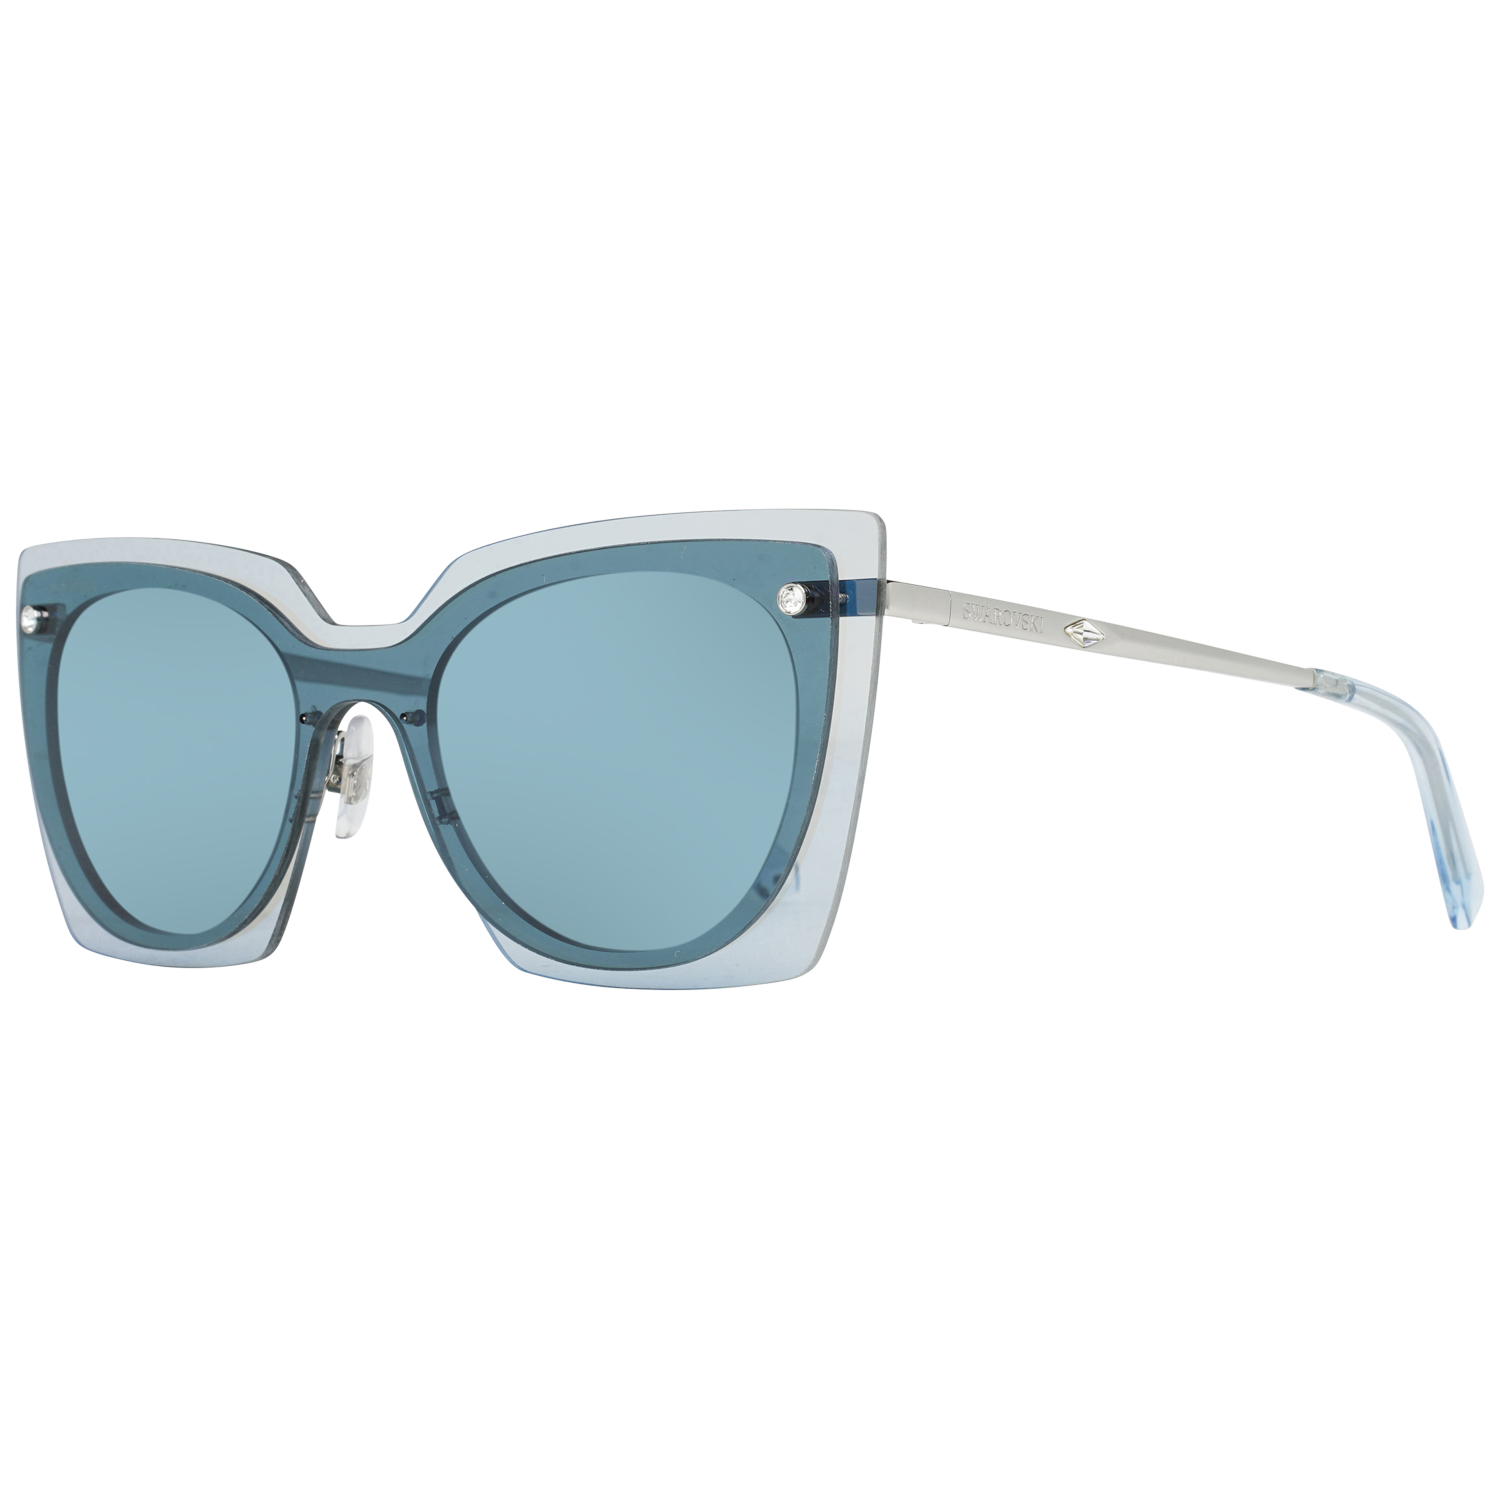 Swarovski Sunglasses Swarovski Sunglasses SK0201 16V 00 Eyeglasses Eyewear UK USA Australia 